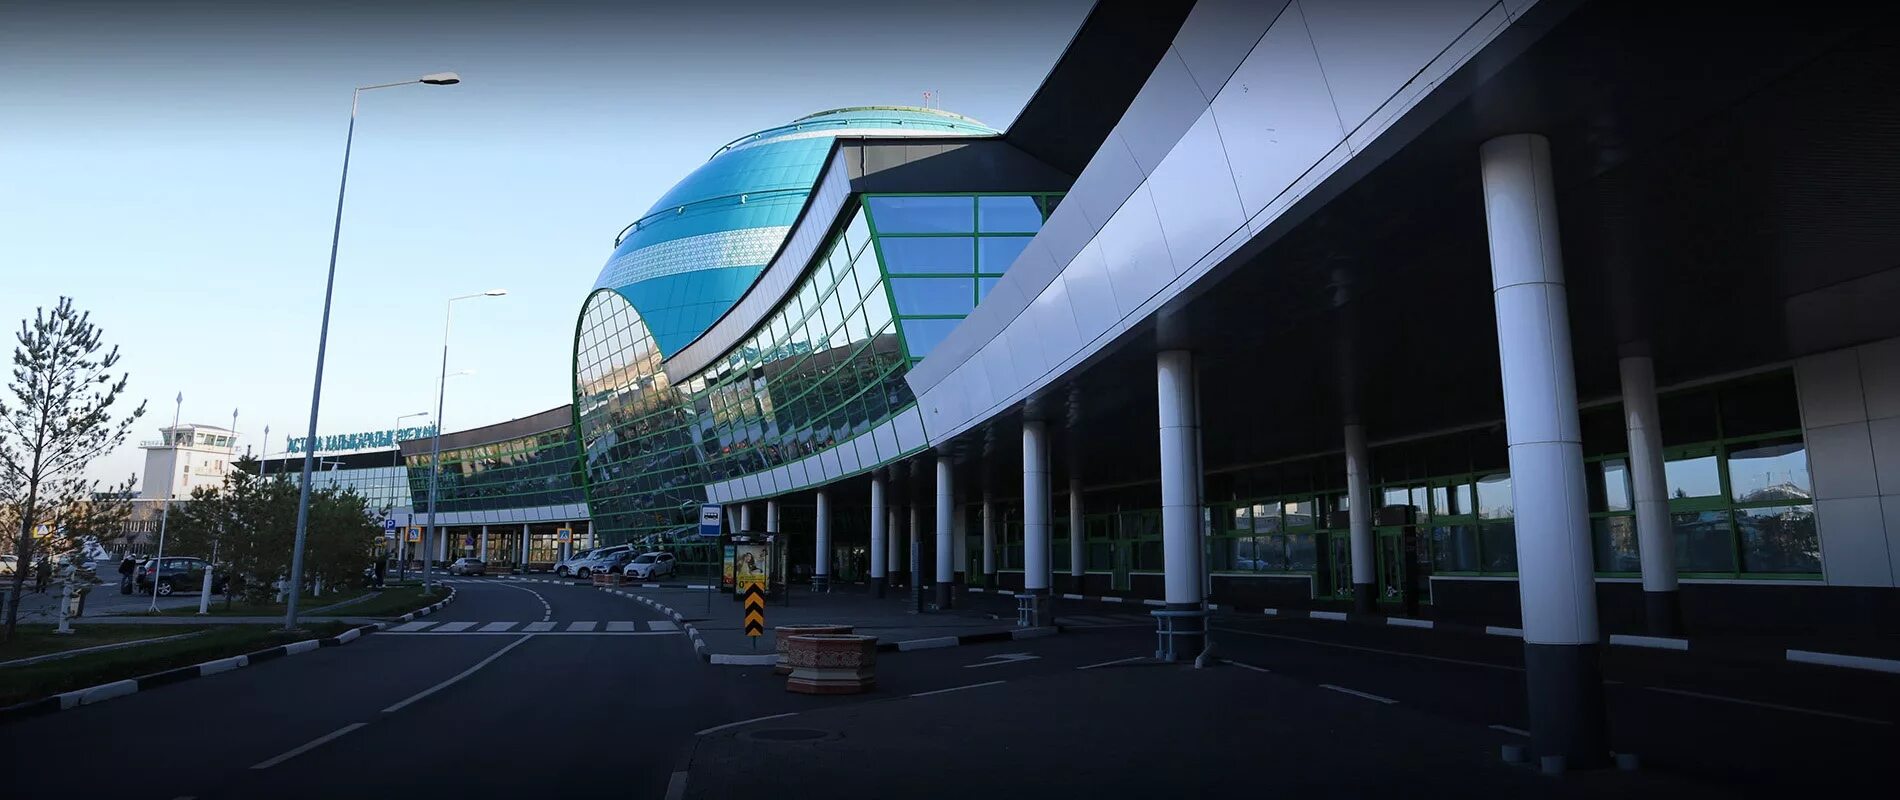 Астана аэропорт цены. Казахстан Астана аэропорт. Международный аэропорт Андижан. Международный аэропорт Астана терминалы. Астана аэропорт внутри.